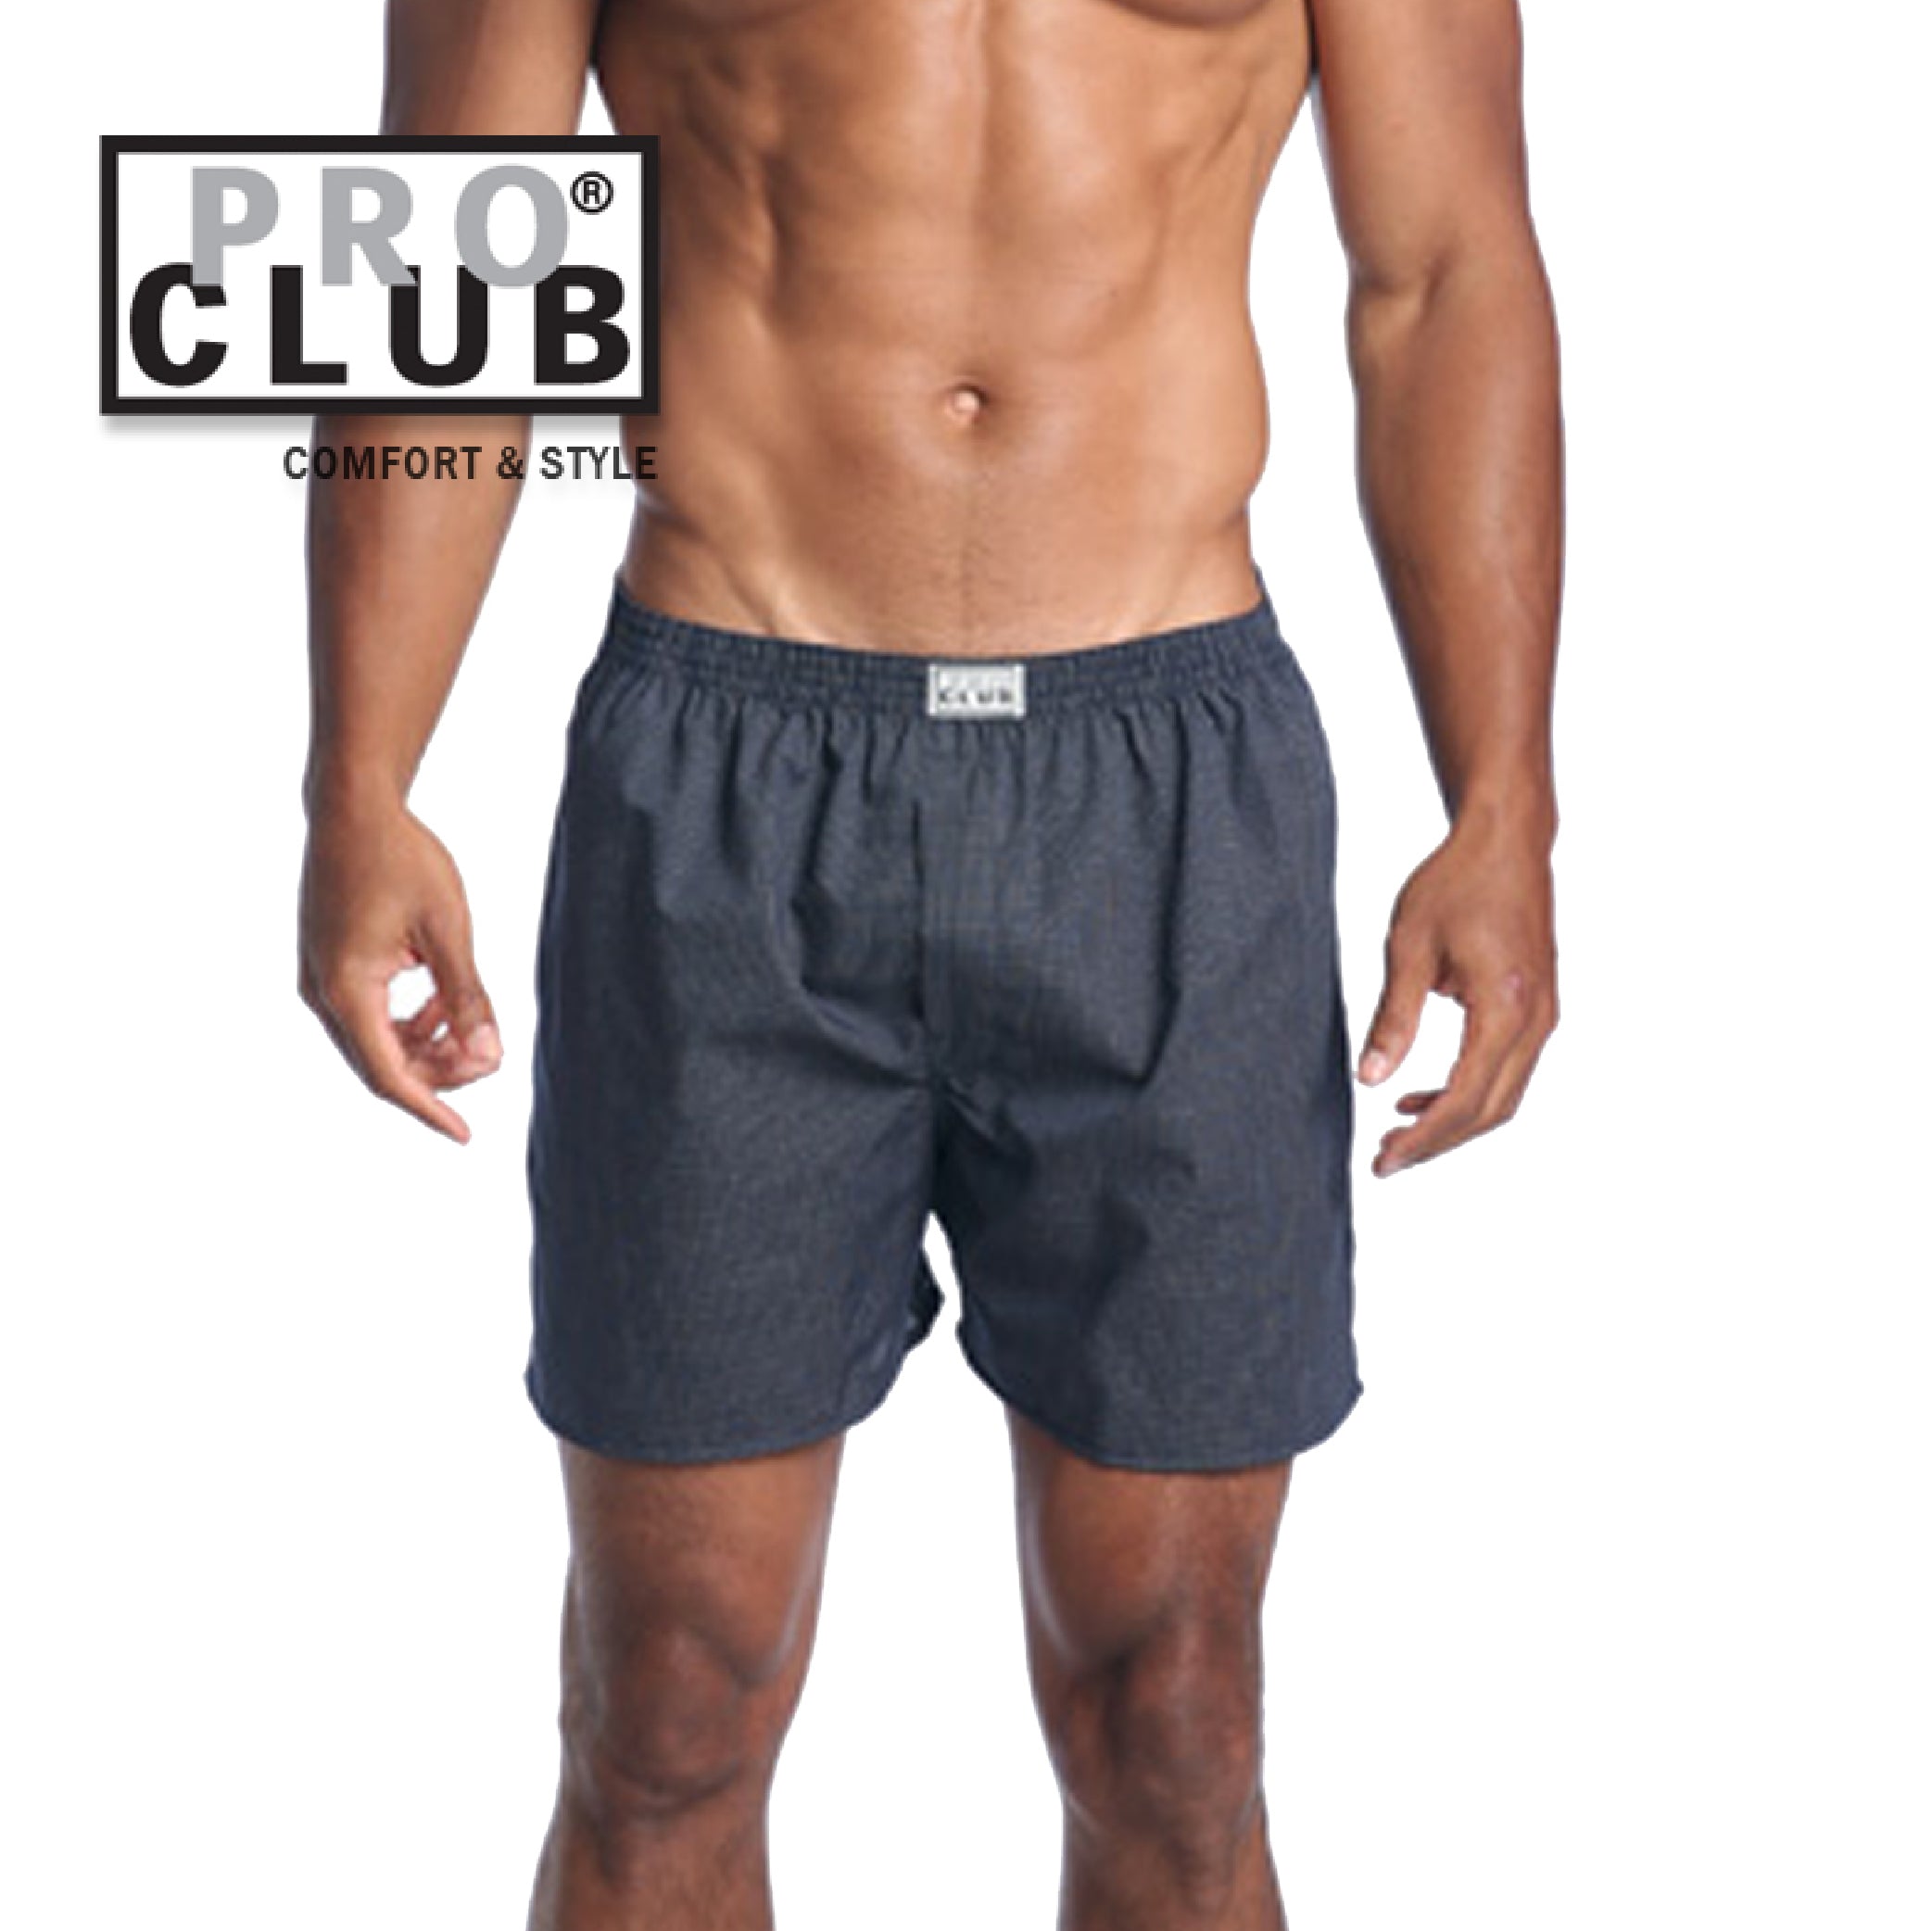 2 New PROCLUB men's underwear Boxer Briefs Pre-Packed PRO CLUB